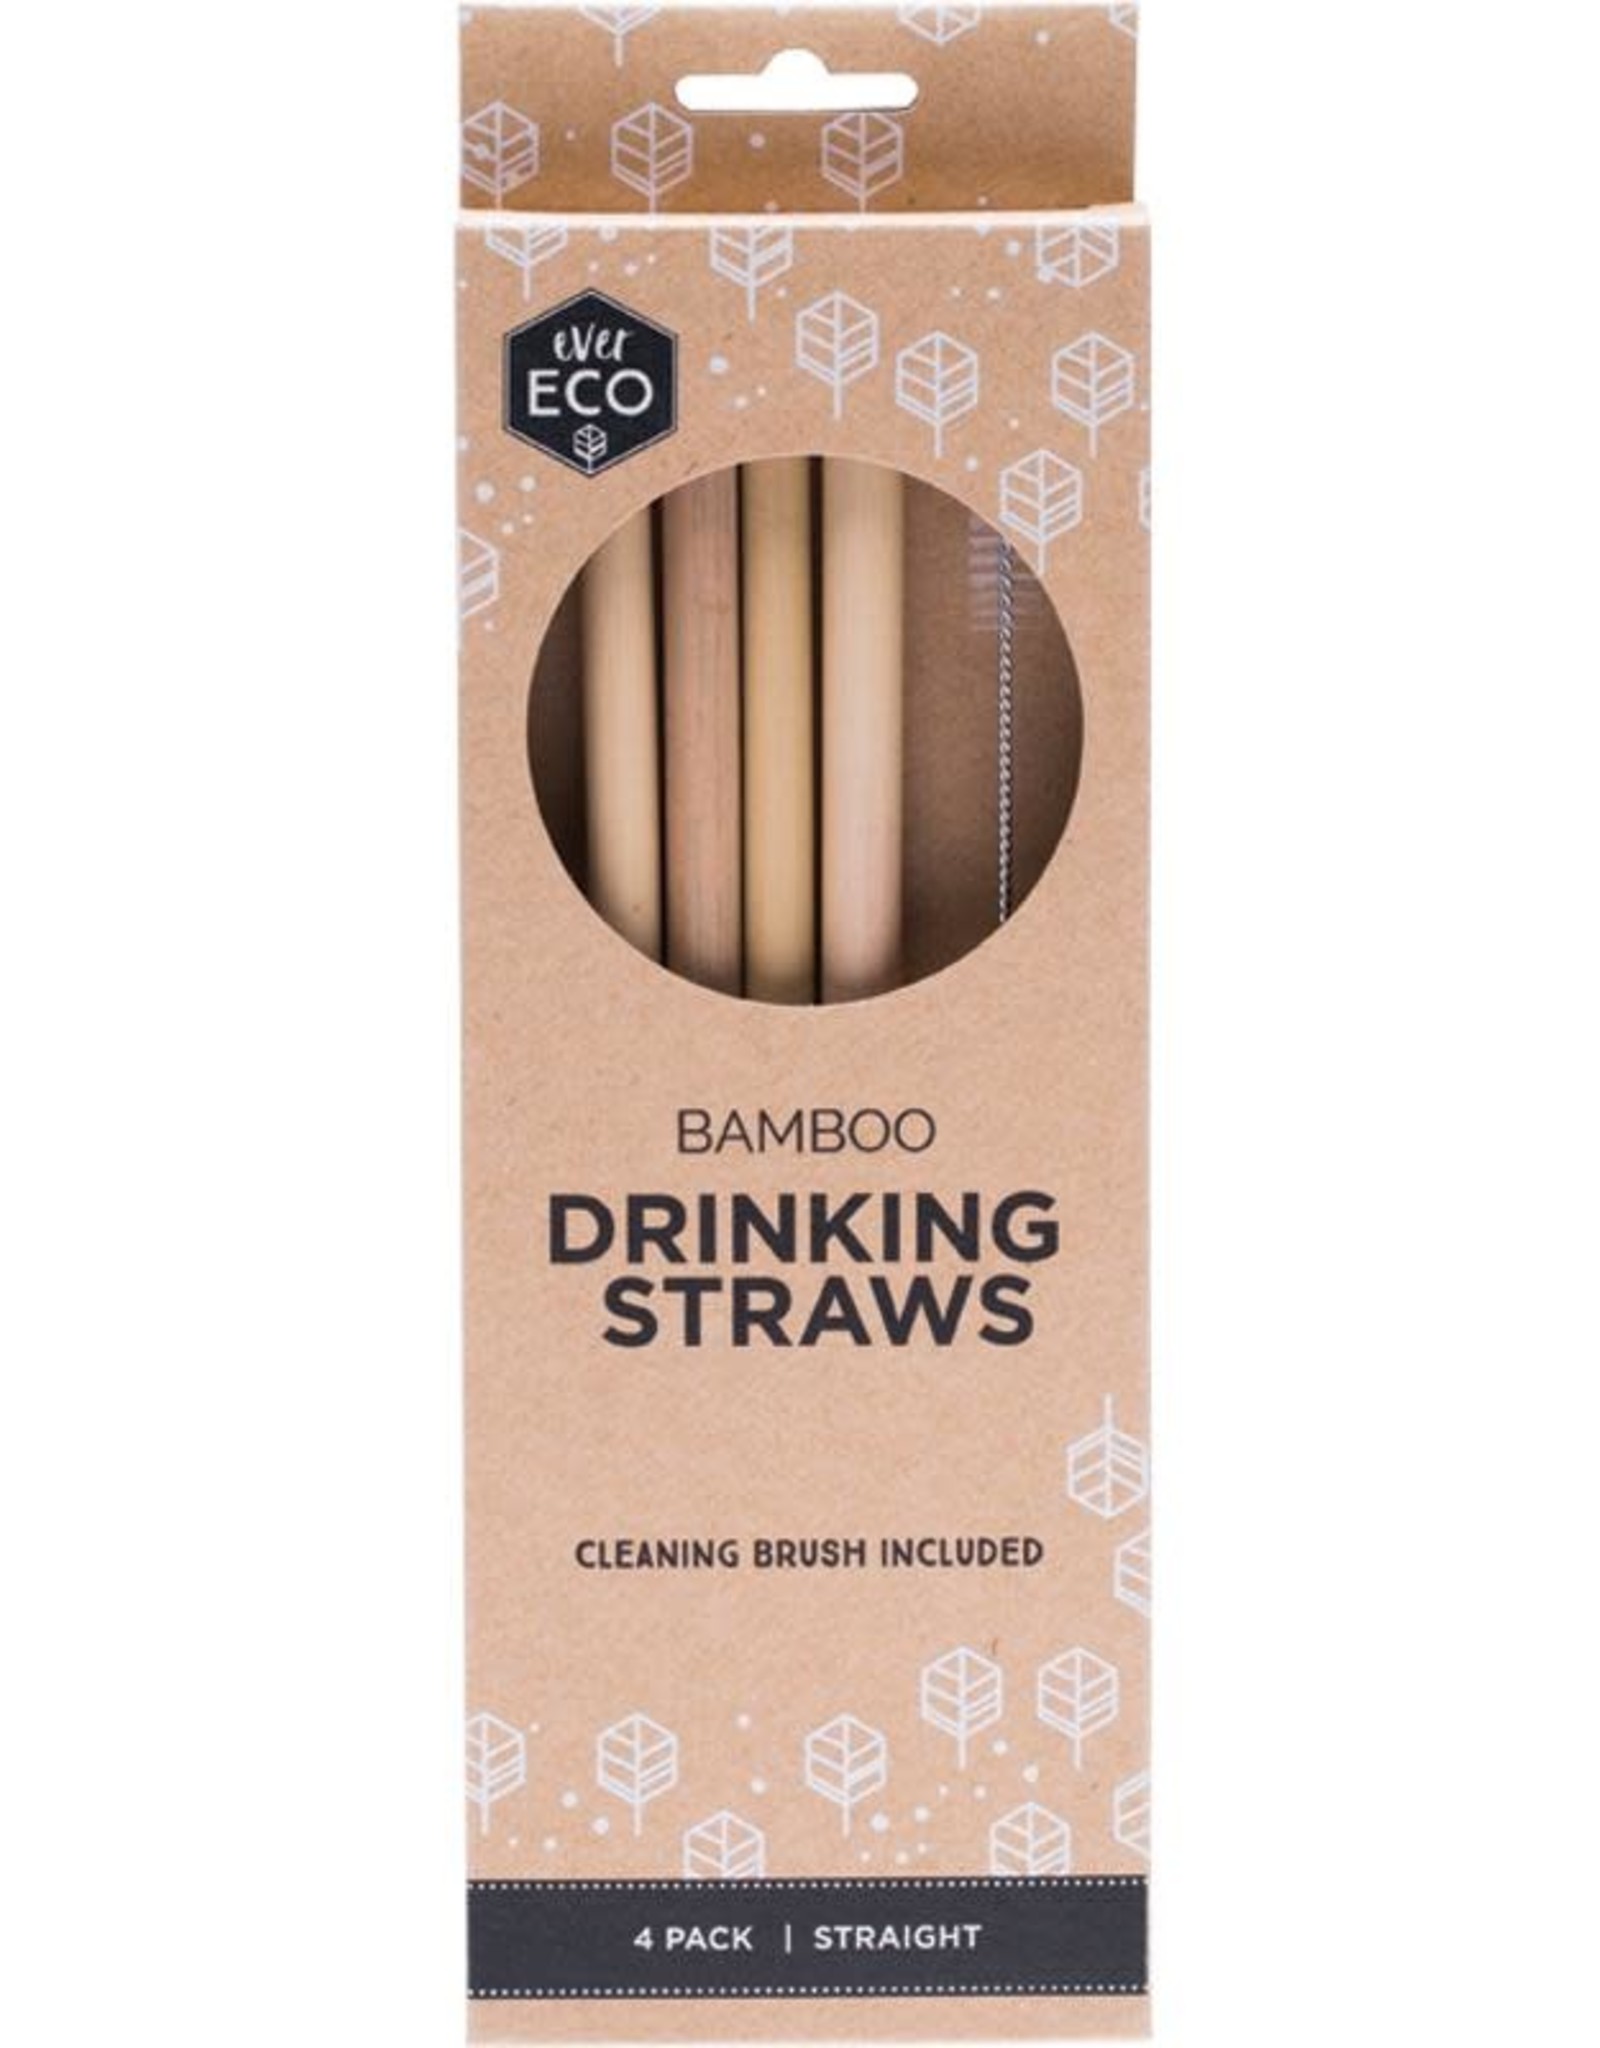 Ever Eco Bamboo Drinking Straws 4